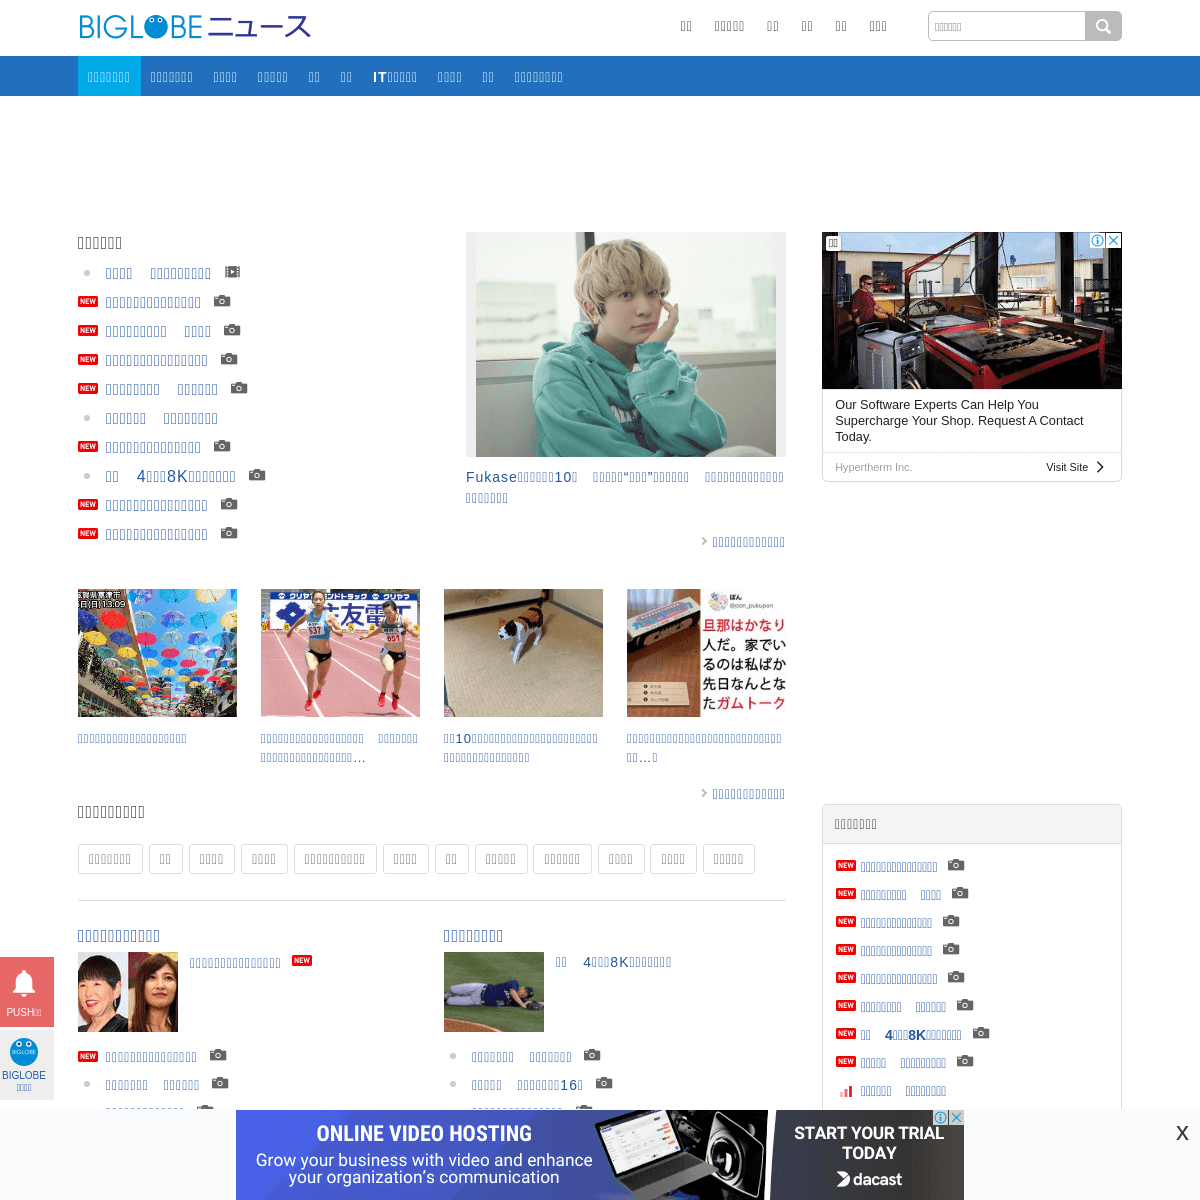 A complete backup of https://news.biglobe.ne.jp